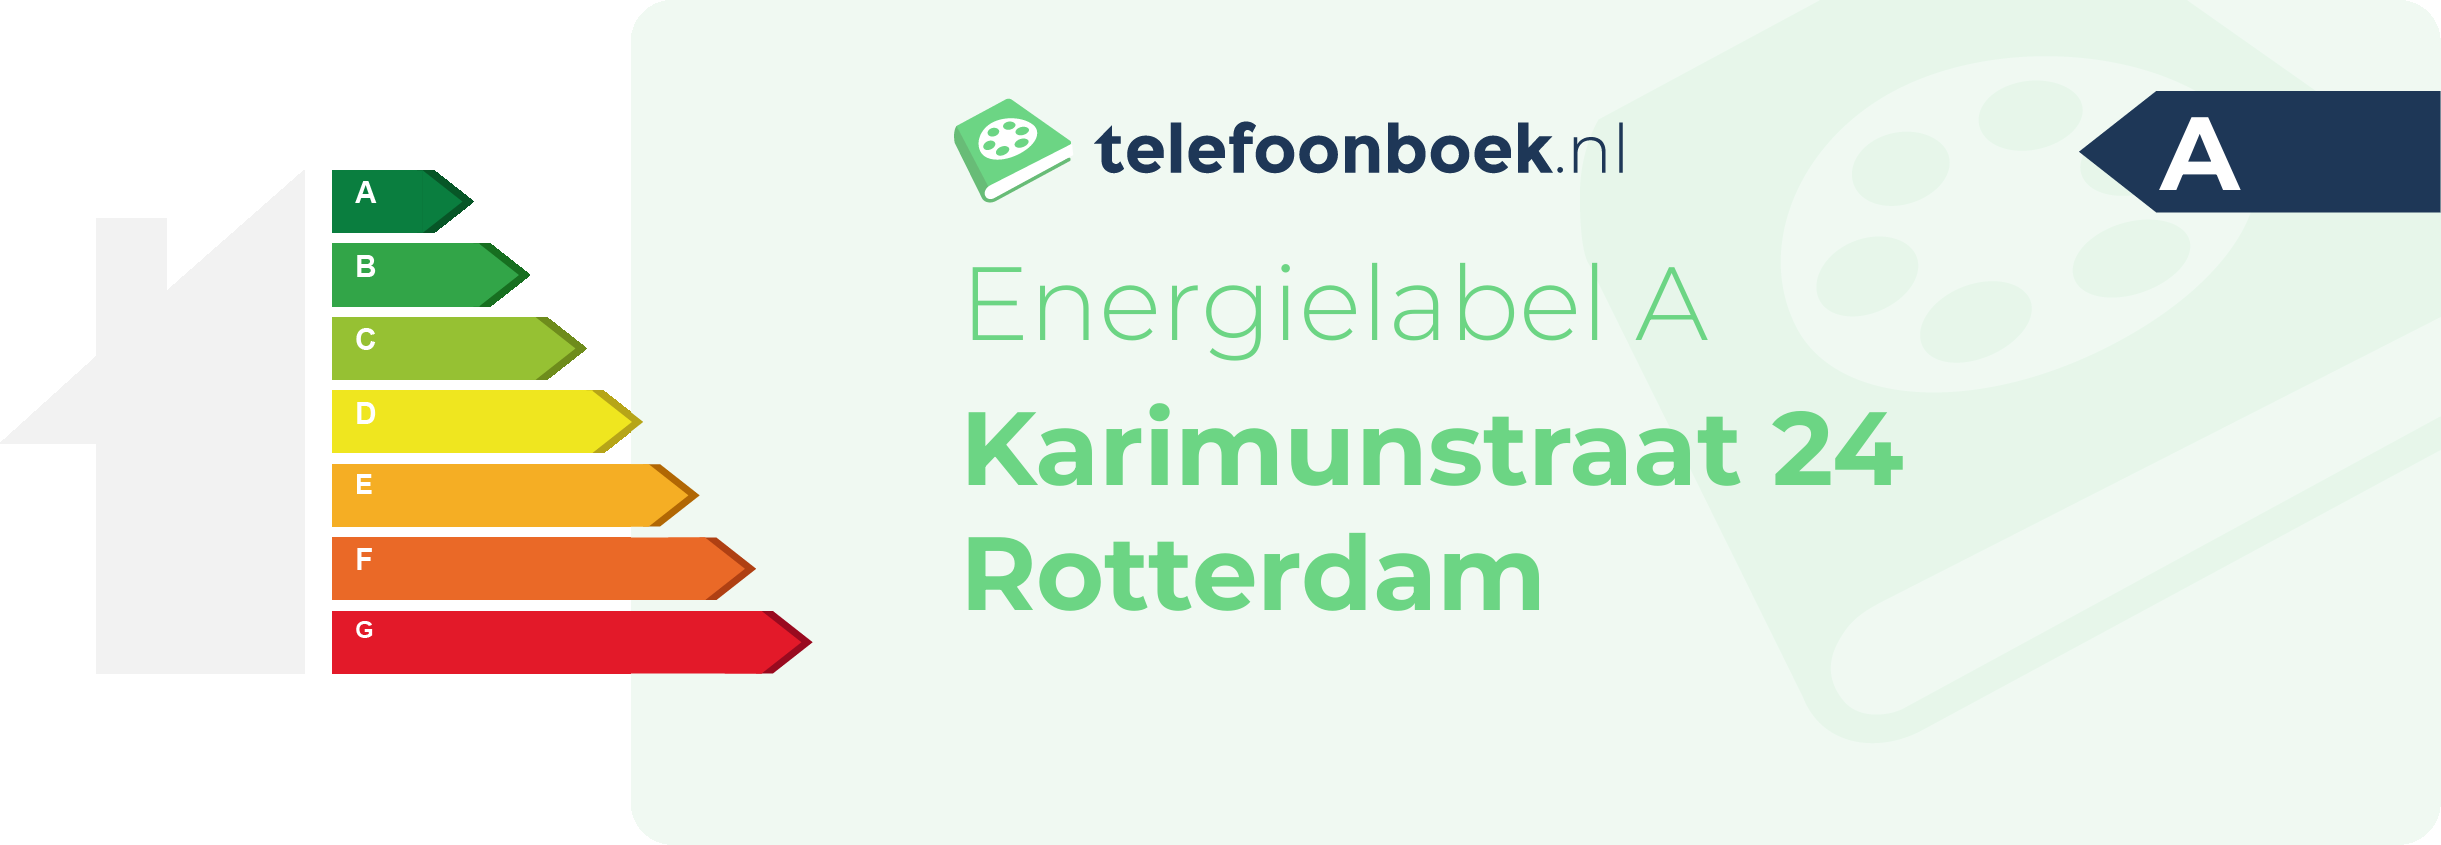 Energielabel Karimunstraat 24 Rotterdam